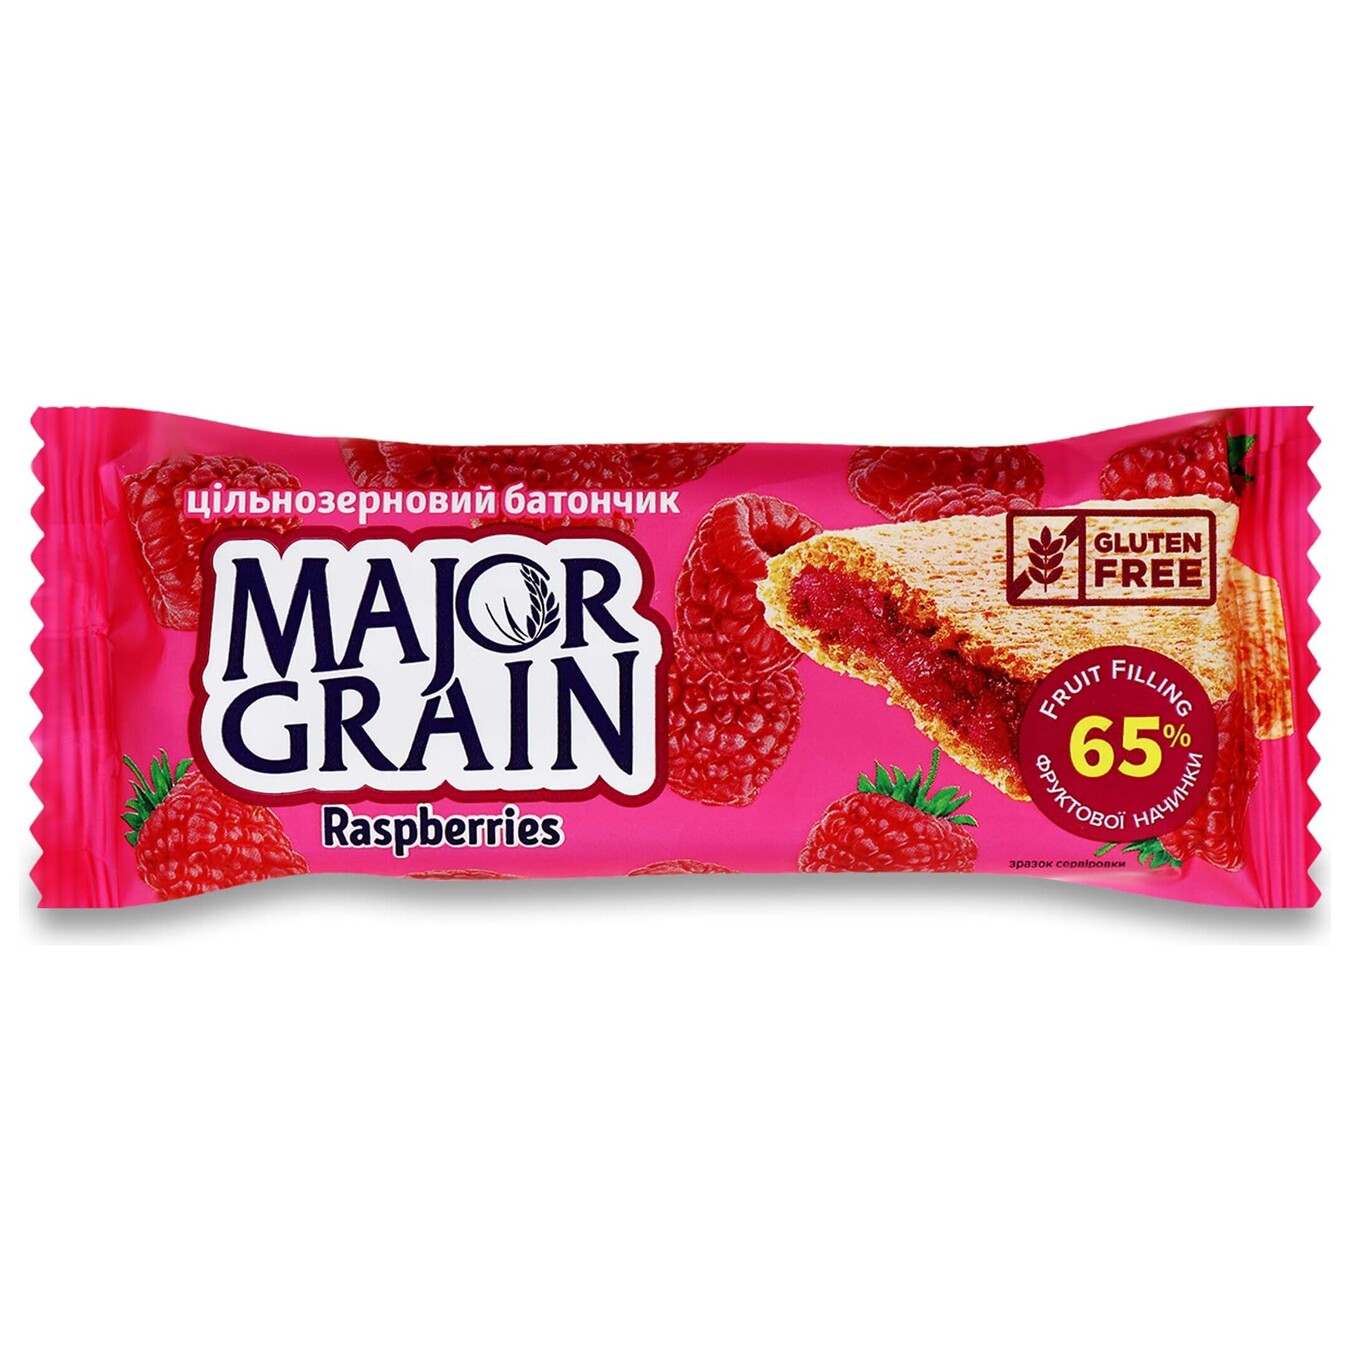 AVK major grain whole grain raspberry bar 40g